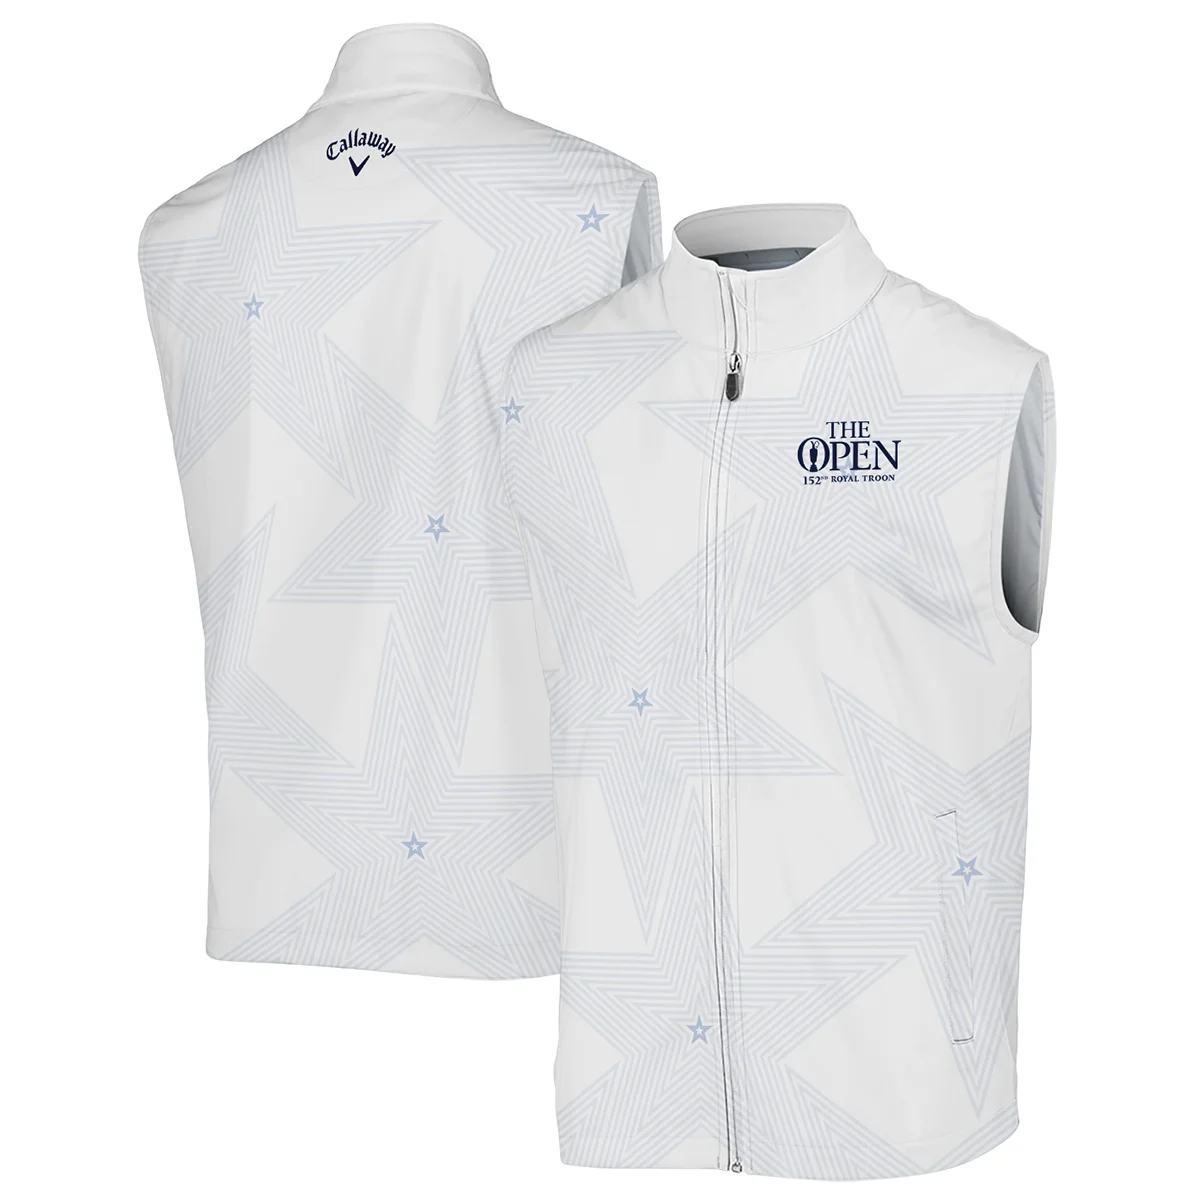 152nd The Open Championship Golf Callaway Unisex Sweatshirt Stars White Navy Golf Sports All Over Print Sweatshirt